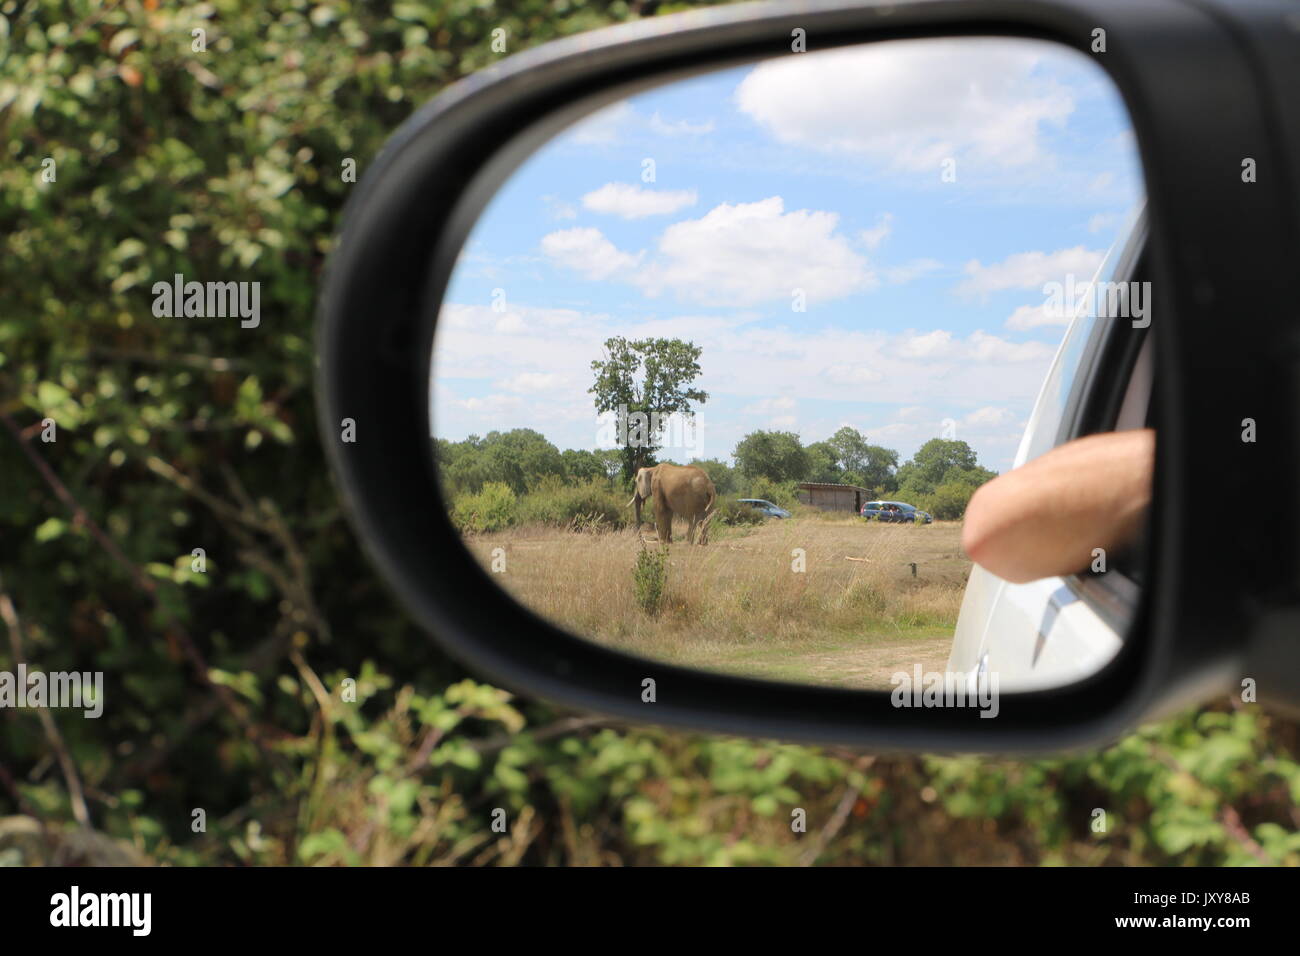 elephant in a car mirror Stock Photo